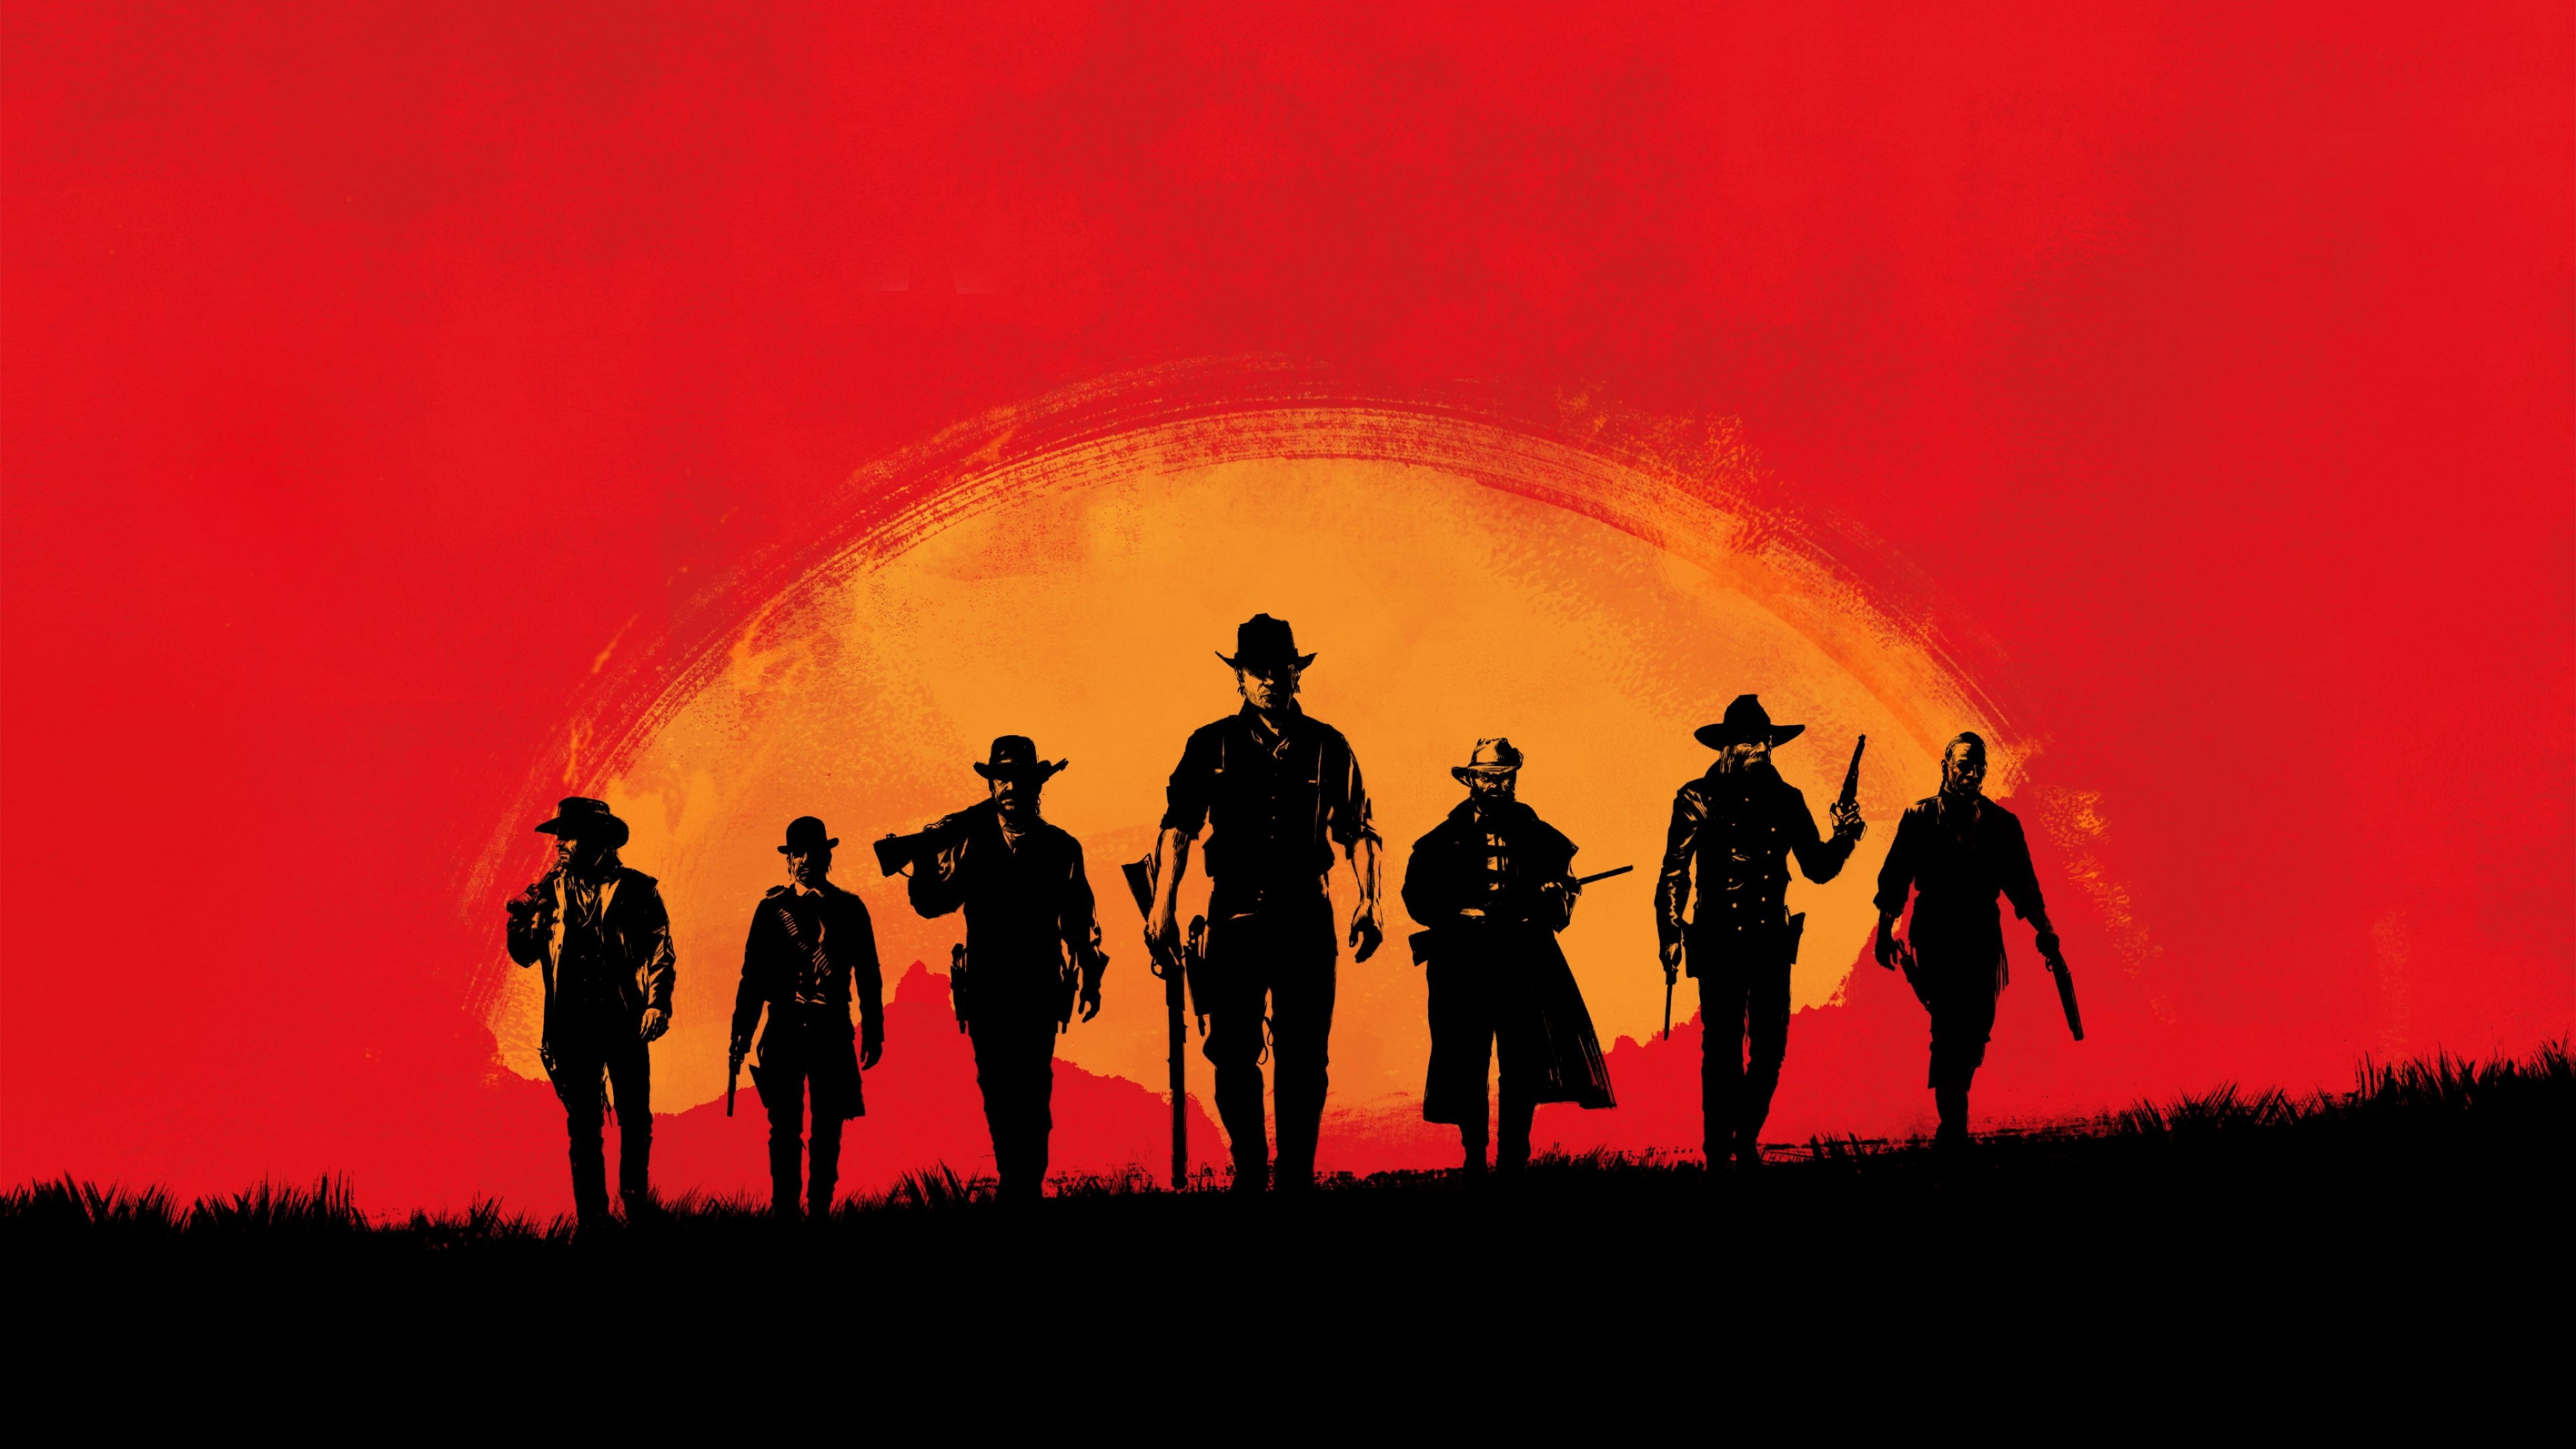 Red Dead Redemption 2, Red Dead Redemption, Rockstar Games, Silhouette, Illustration. Wallpaper in 3840x2160 Resolution